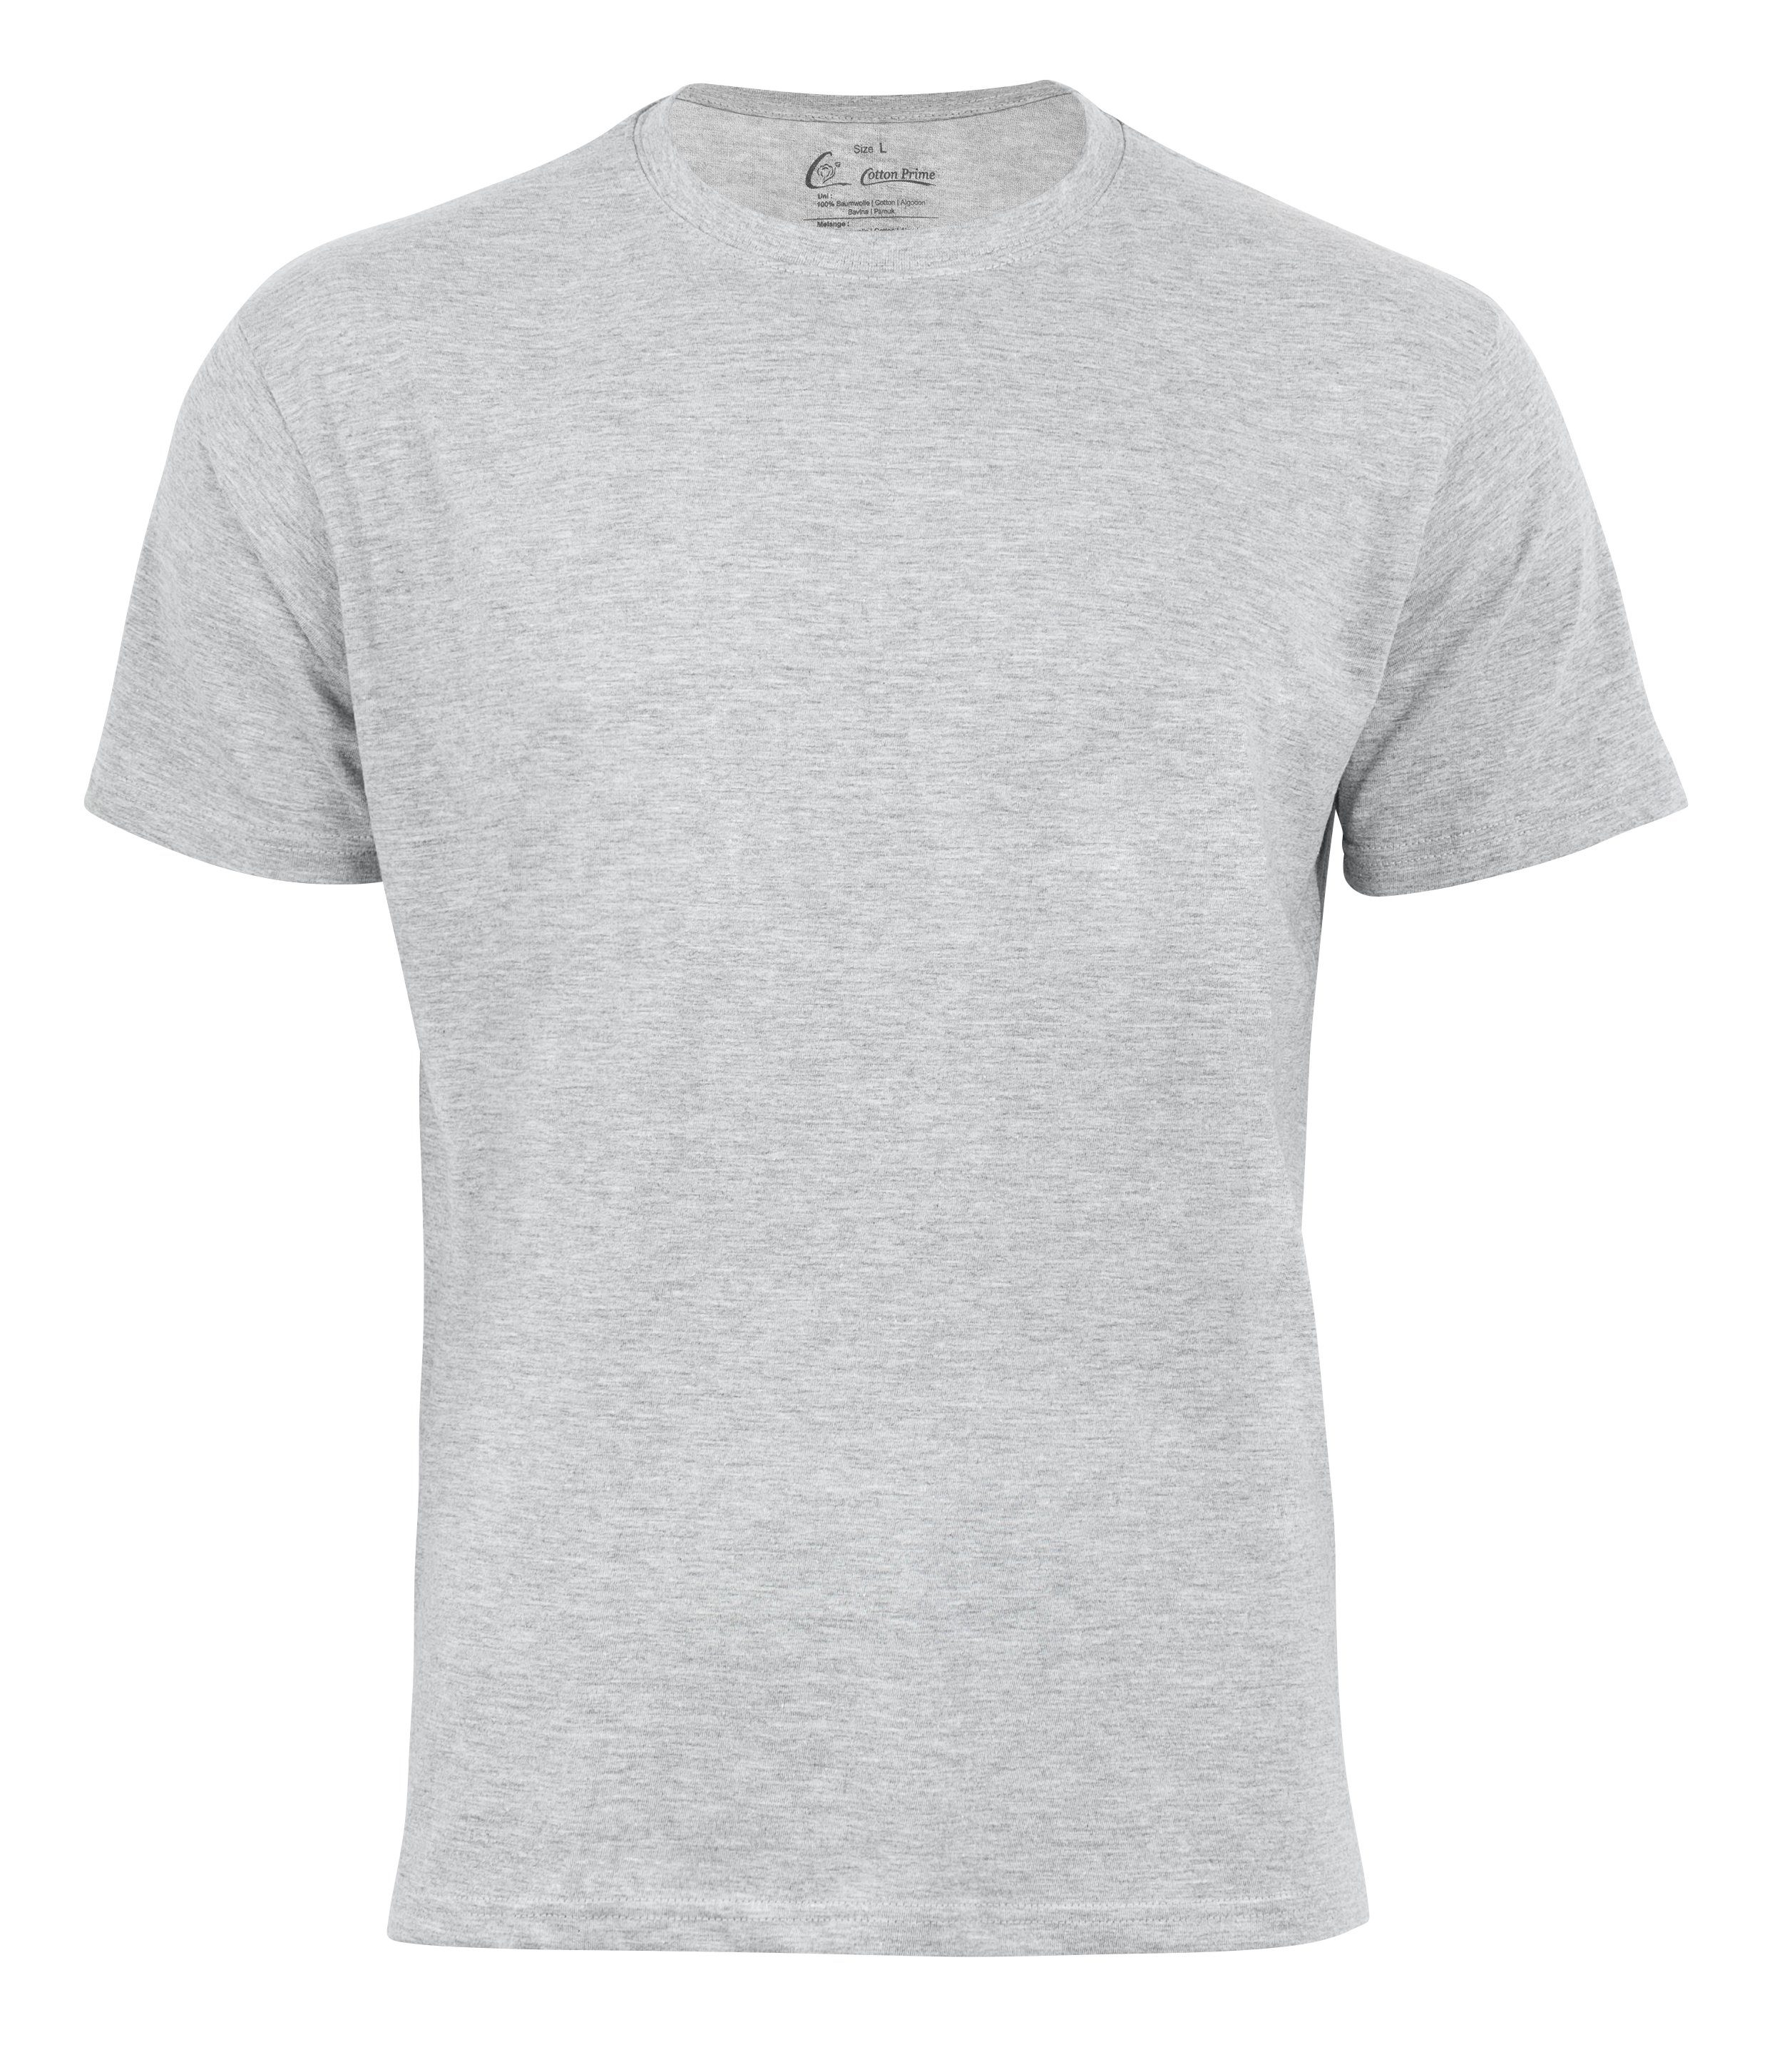 Tee Grau Cotton O-Neck T-Shirt Prime® -